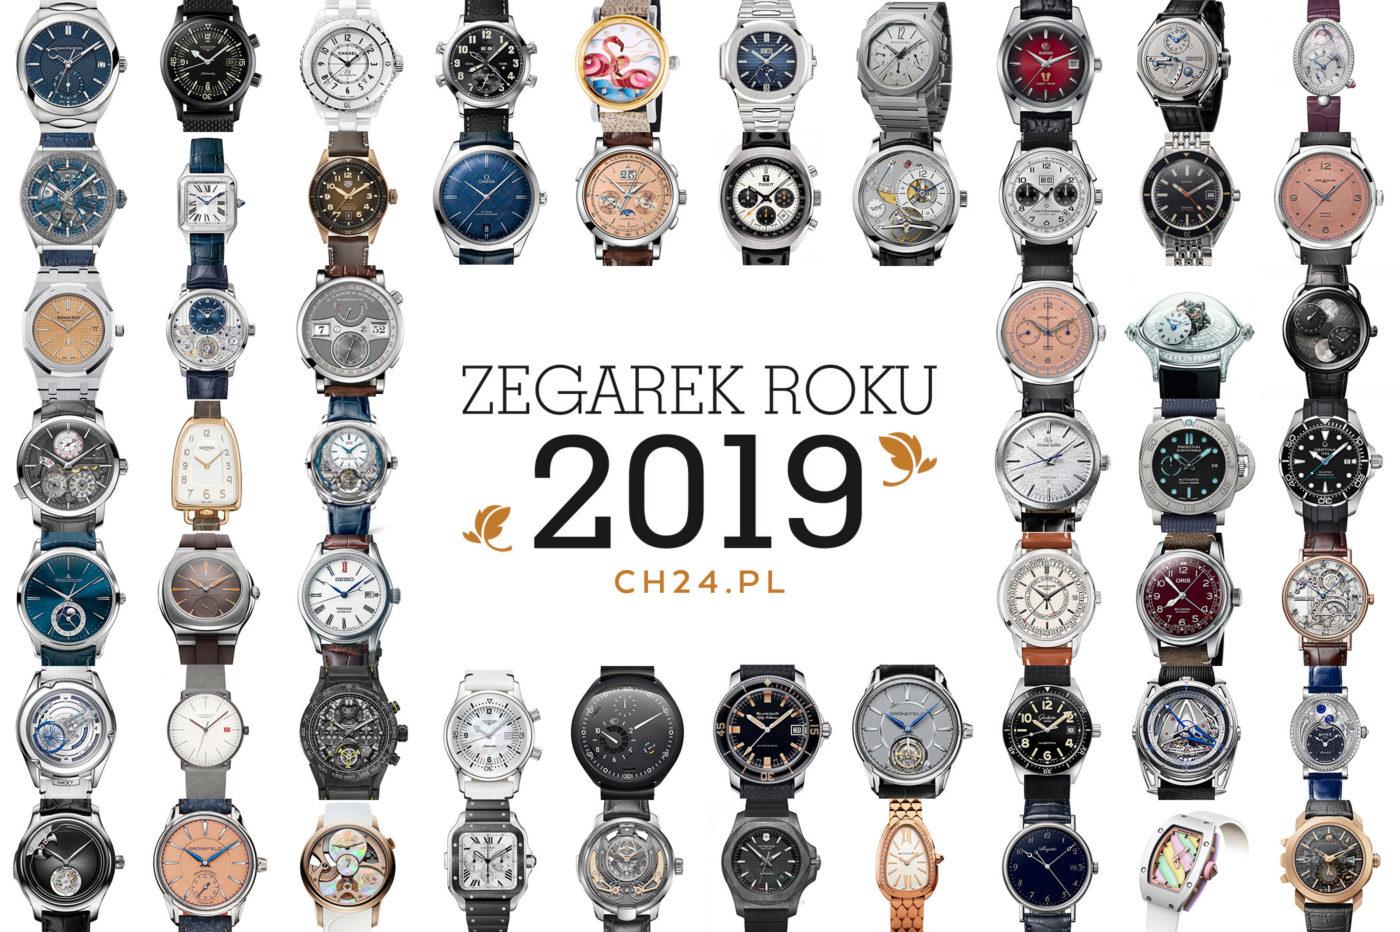 Zegarek Roku 2019 – 10. edycja(!)